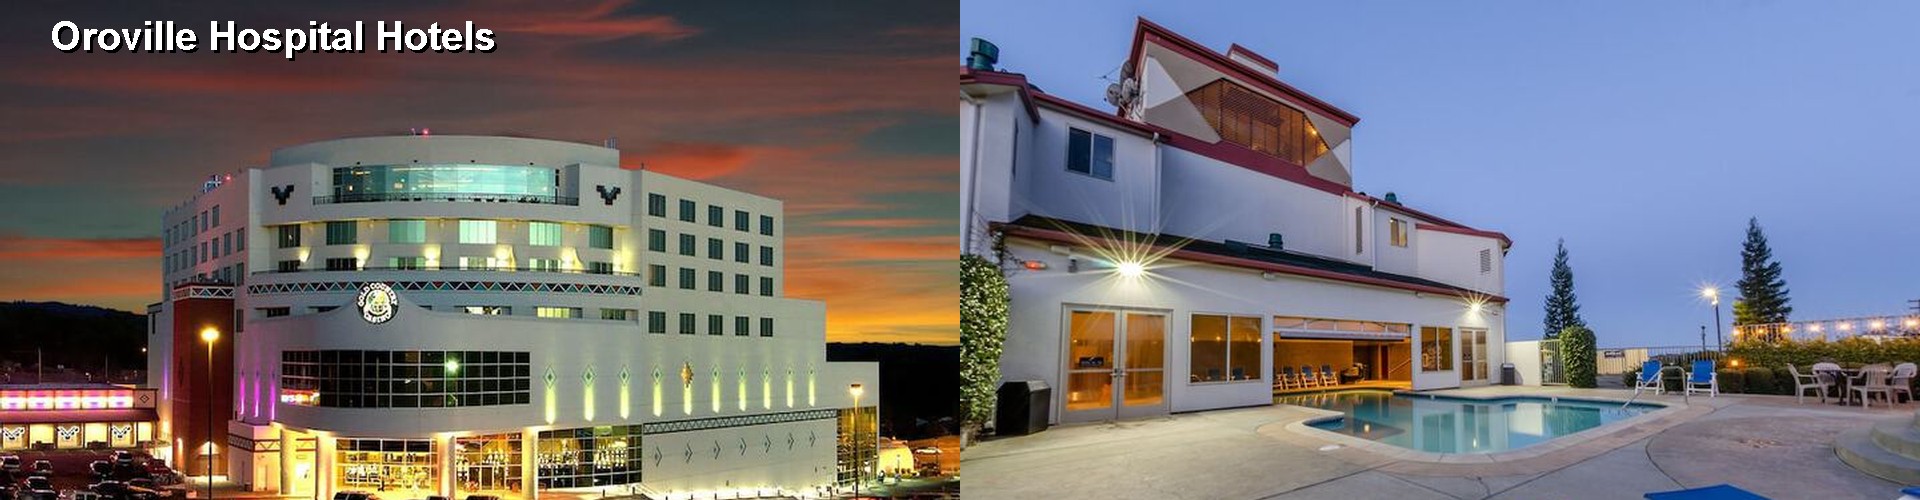 3 Best Hotels near Oroville Hospital